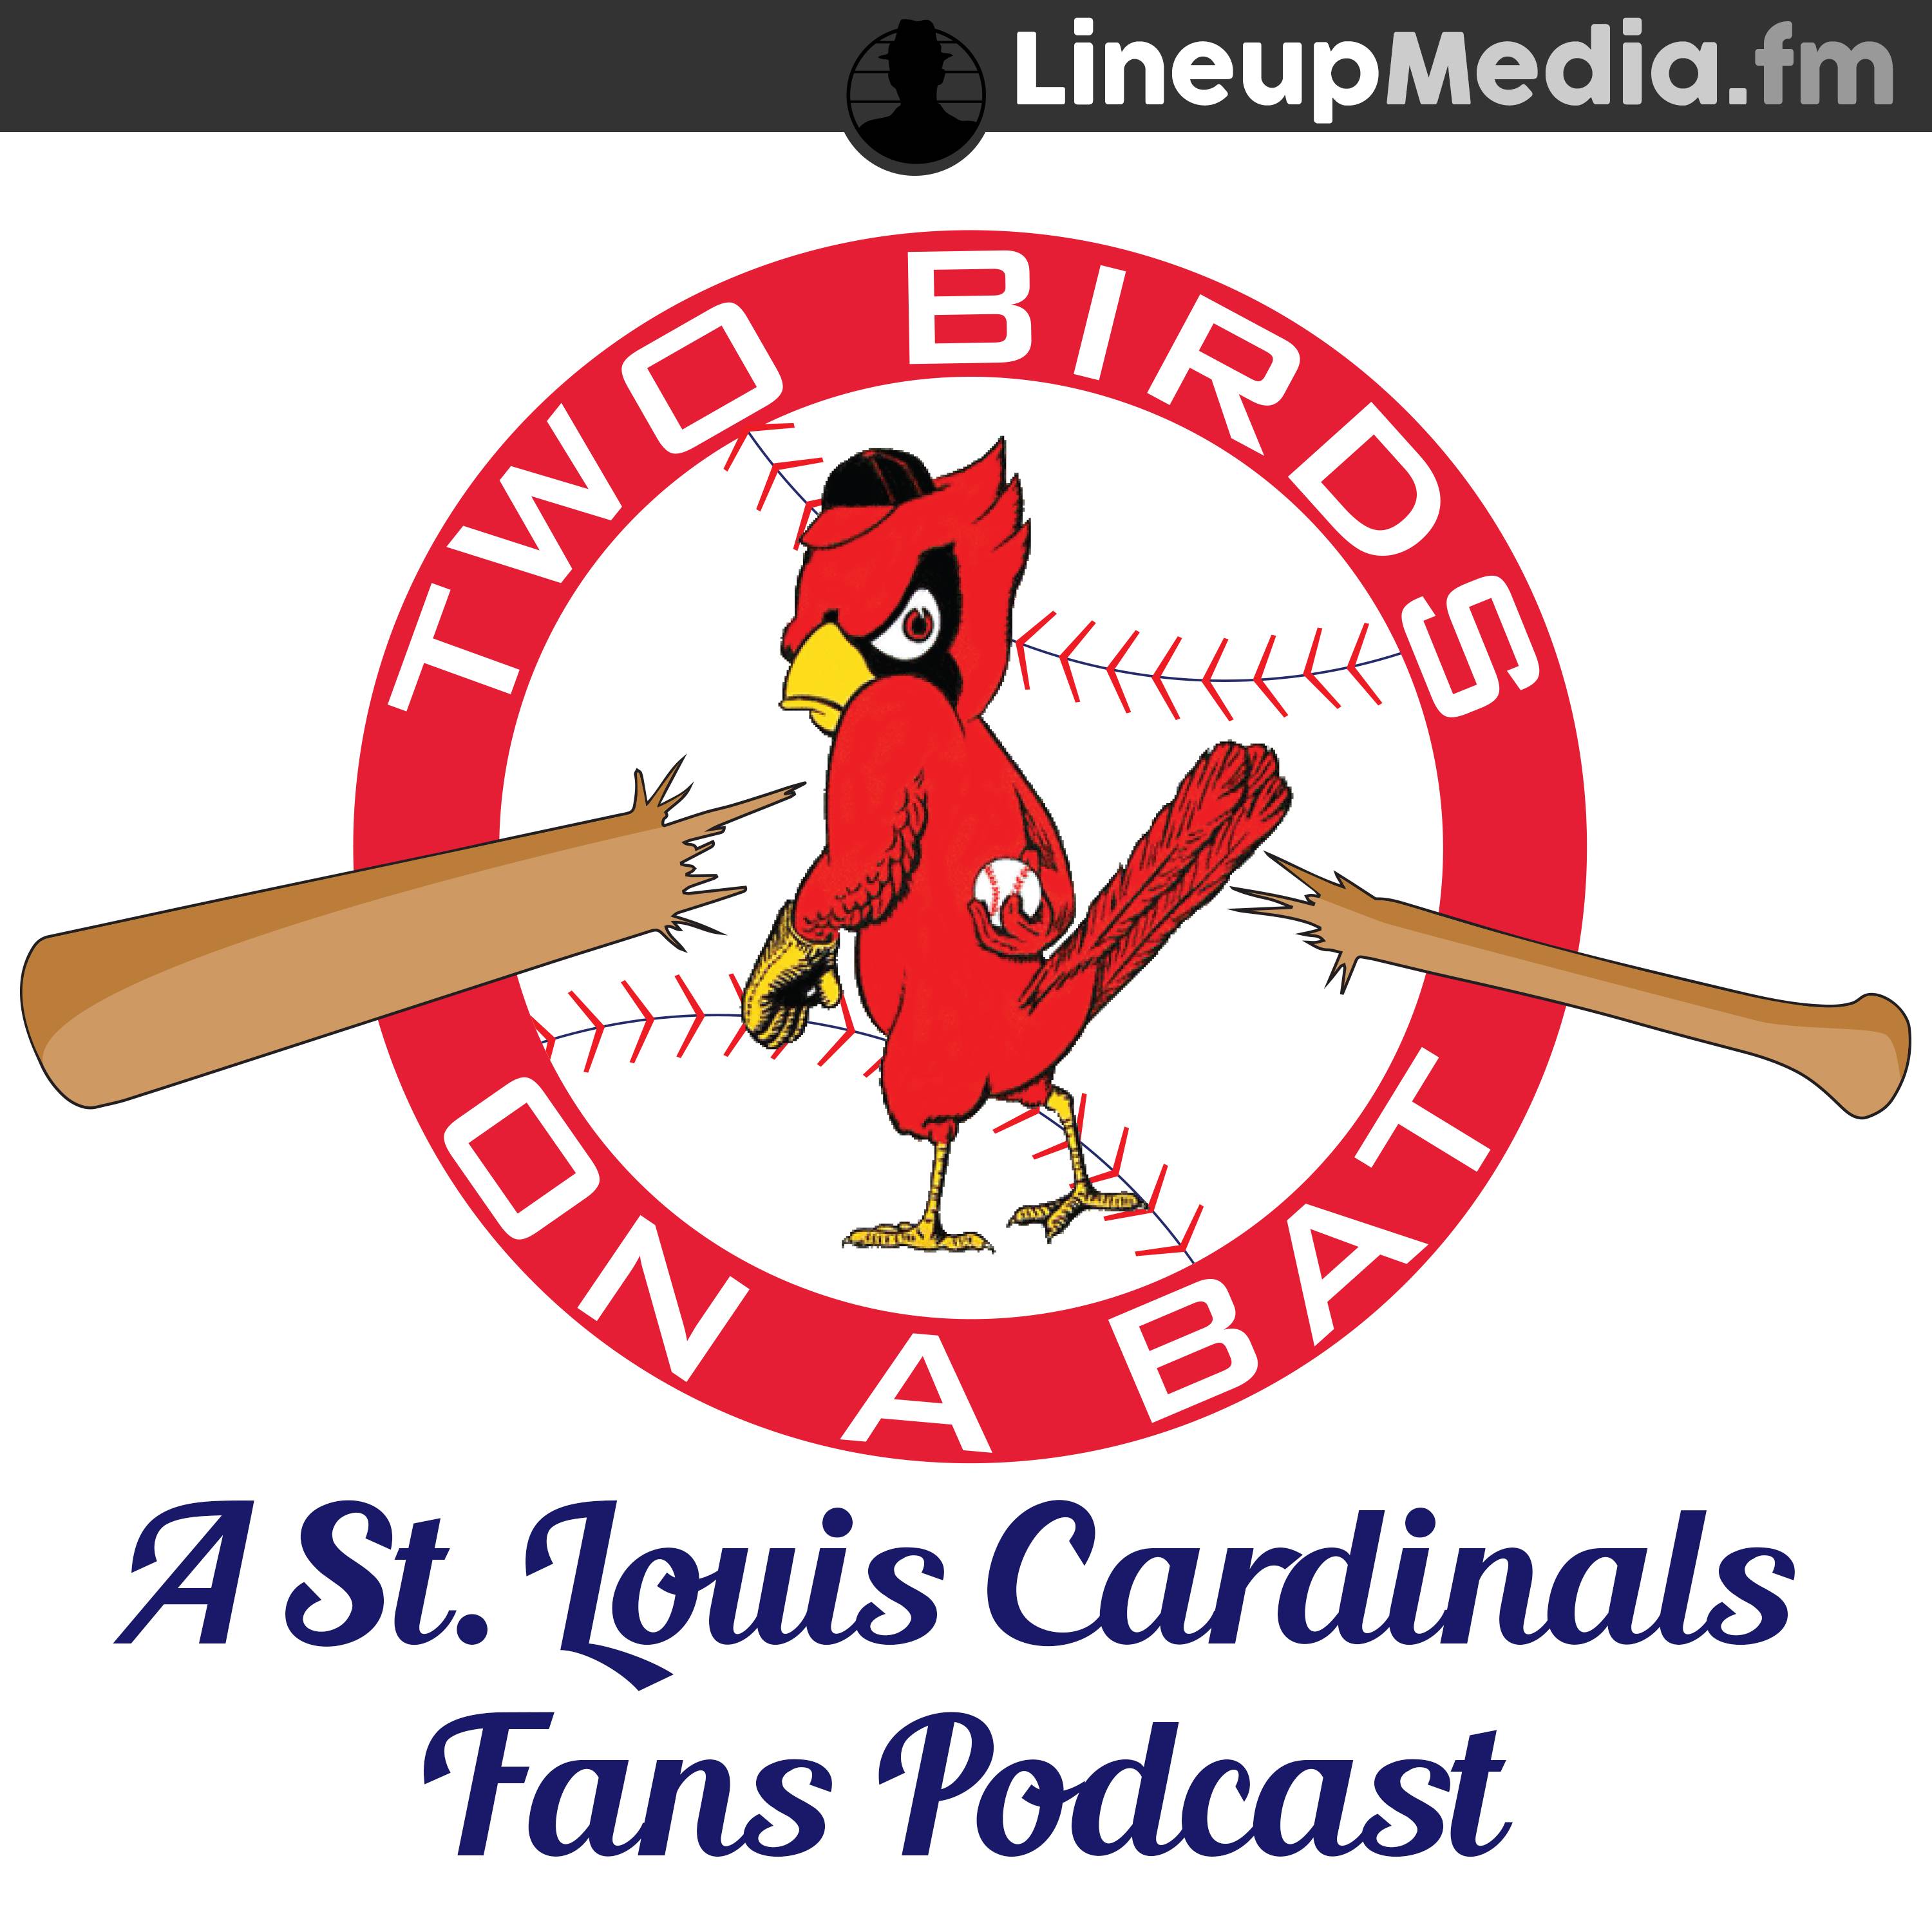 The Birds On Bat Cardinals Logo - Two Birds on a Bat Podcast for Cardinal Fans,